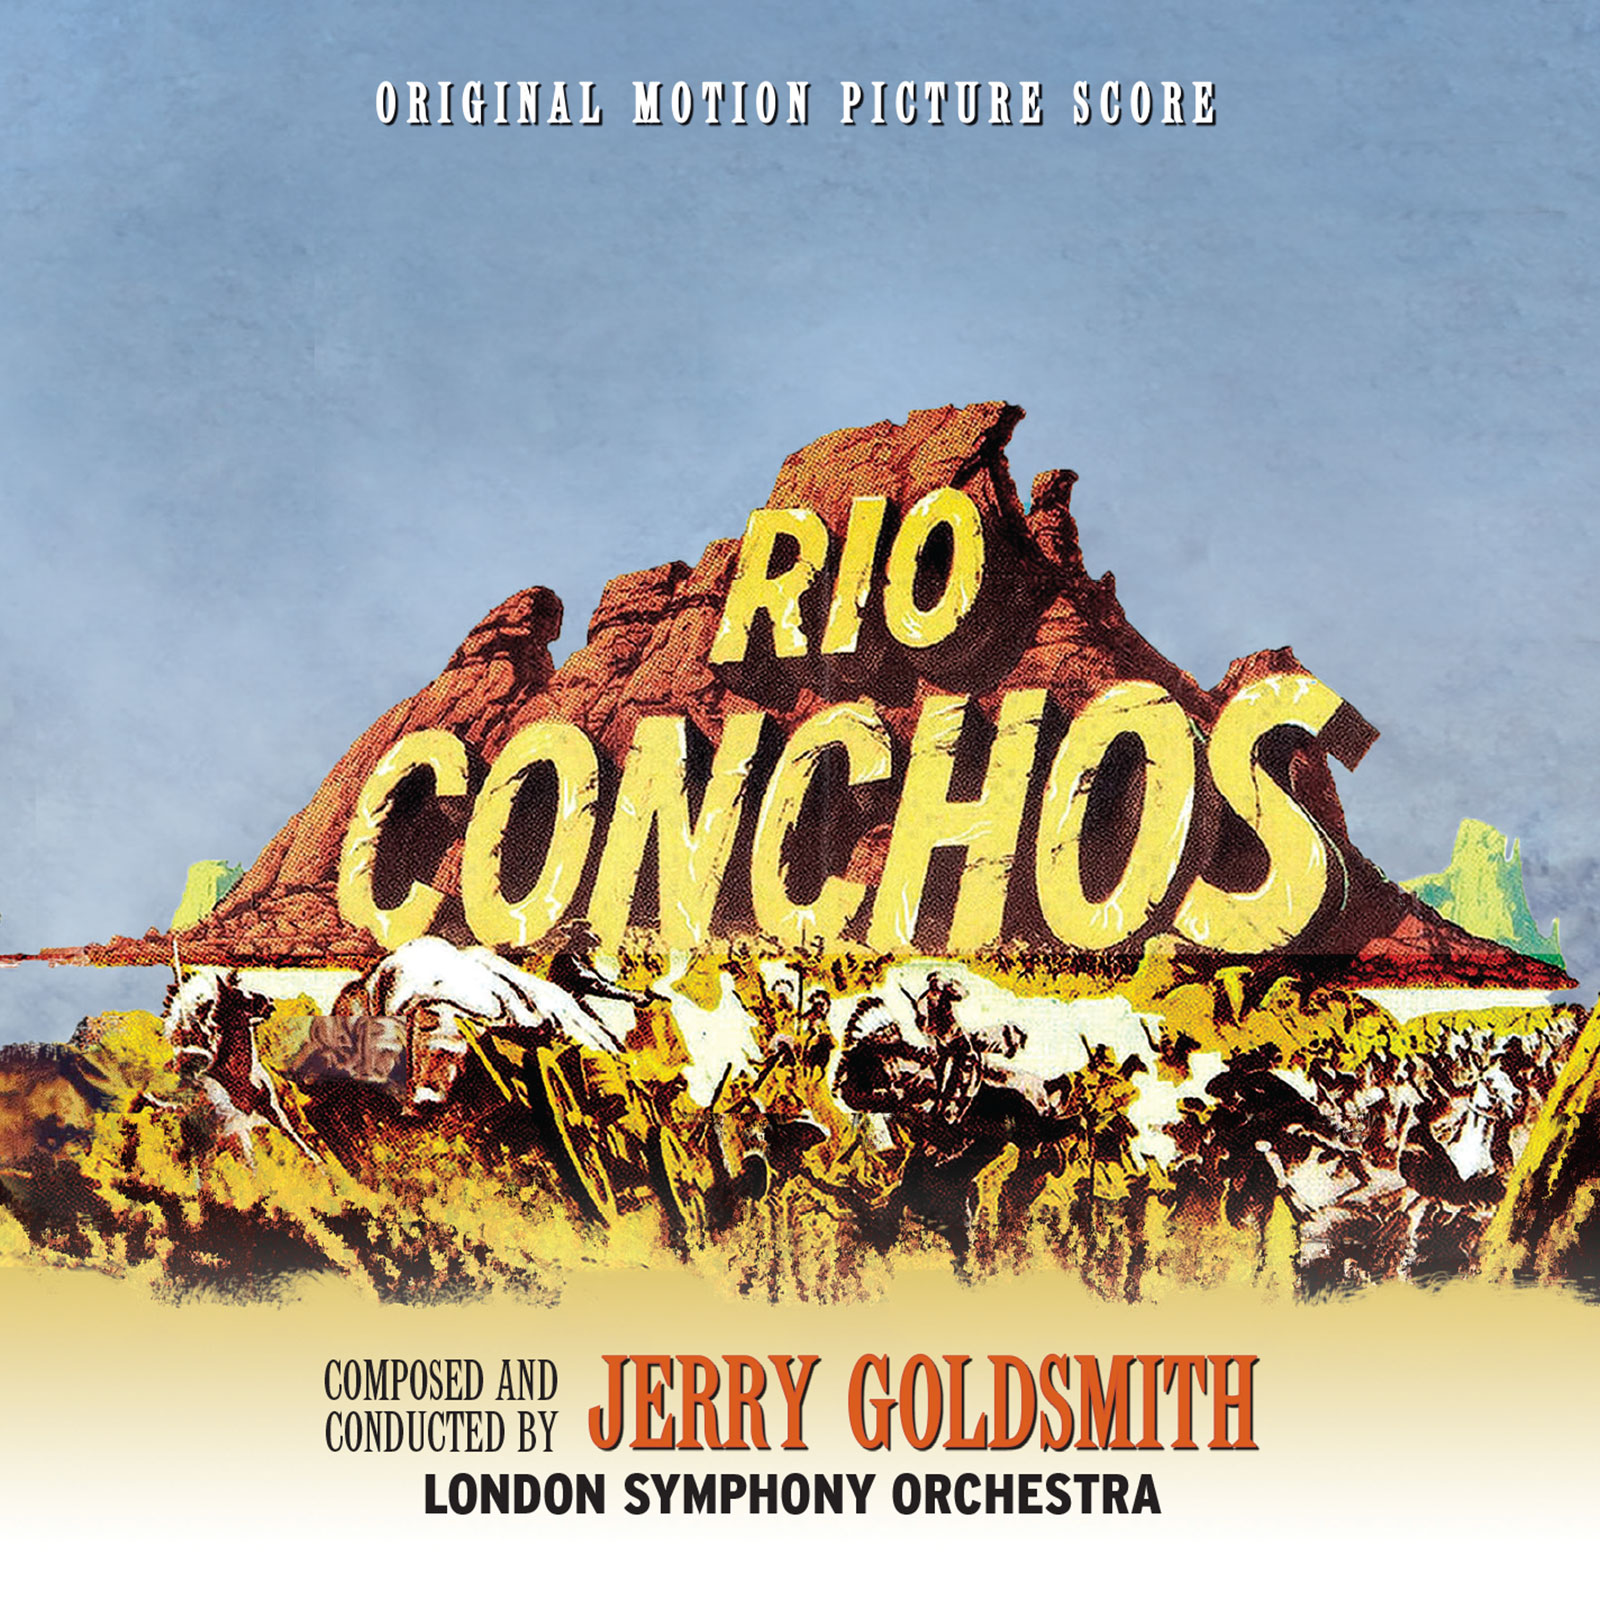 INTRADA REEDITA 'RO CONCHOS' DE JERRY GOLDSMITH